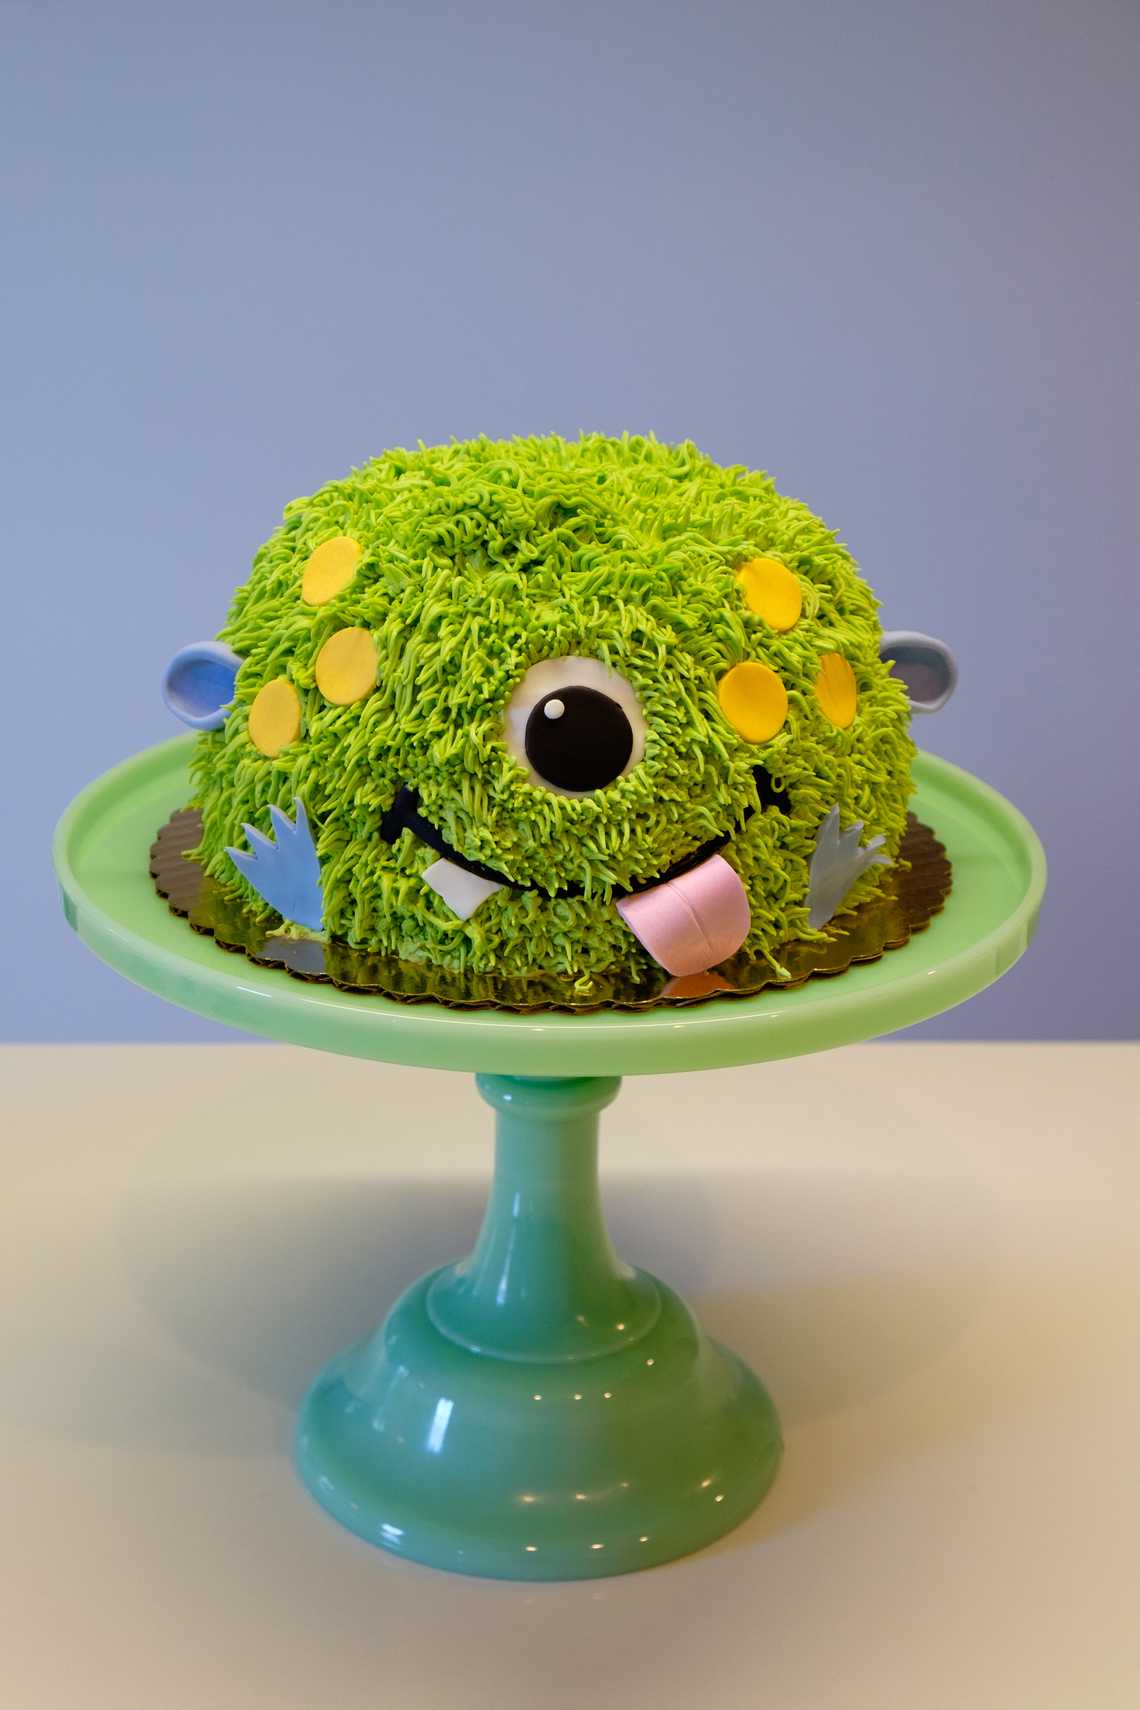 Green Monster Cake — May 15, 2016